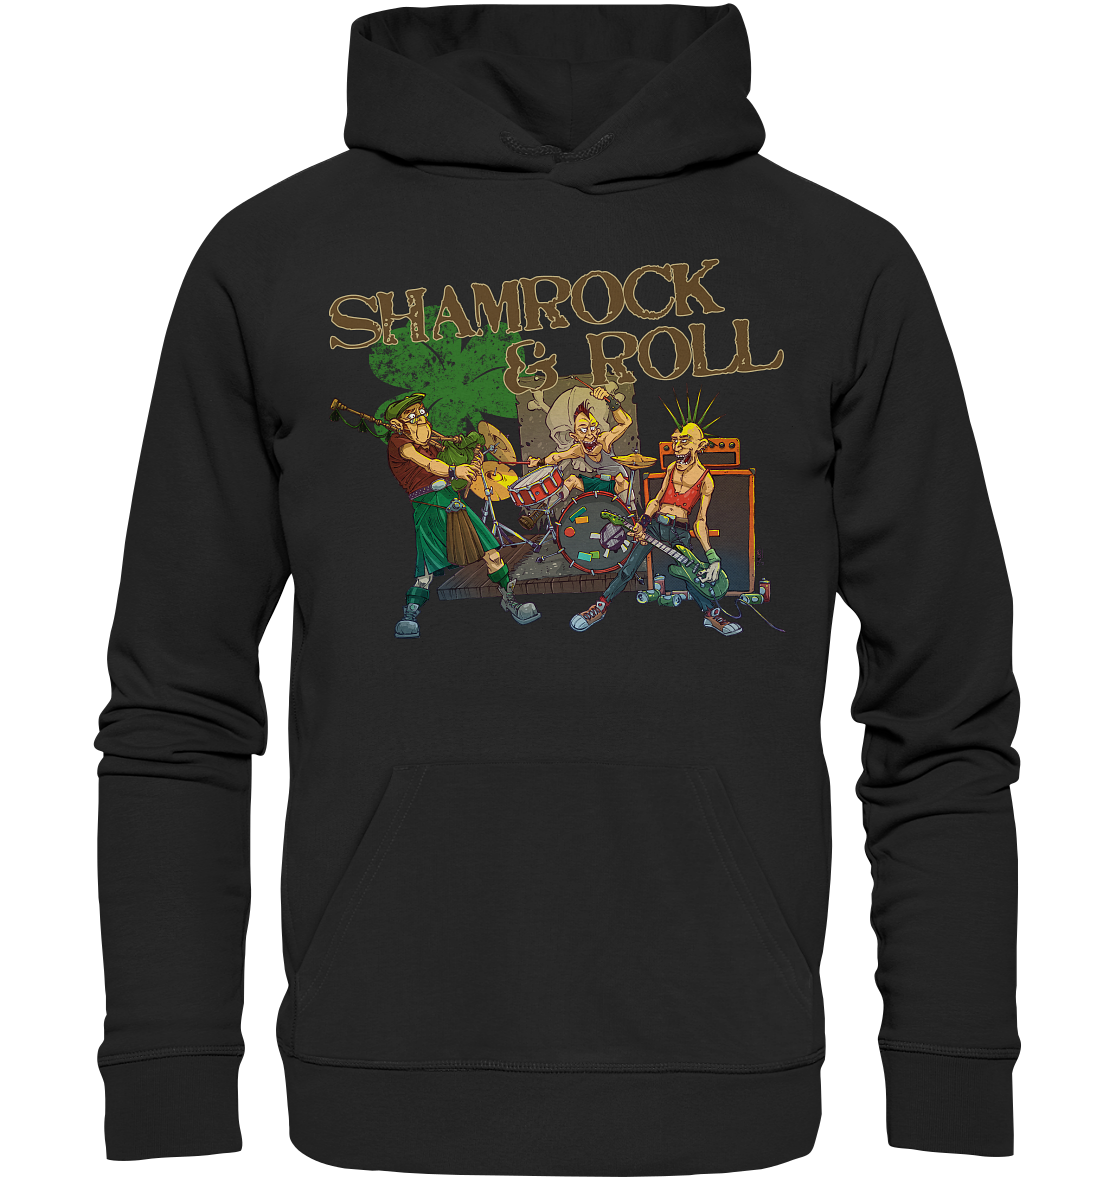 Shamrock & Roll "Band" - Premium Unisex Hoodie